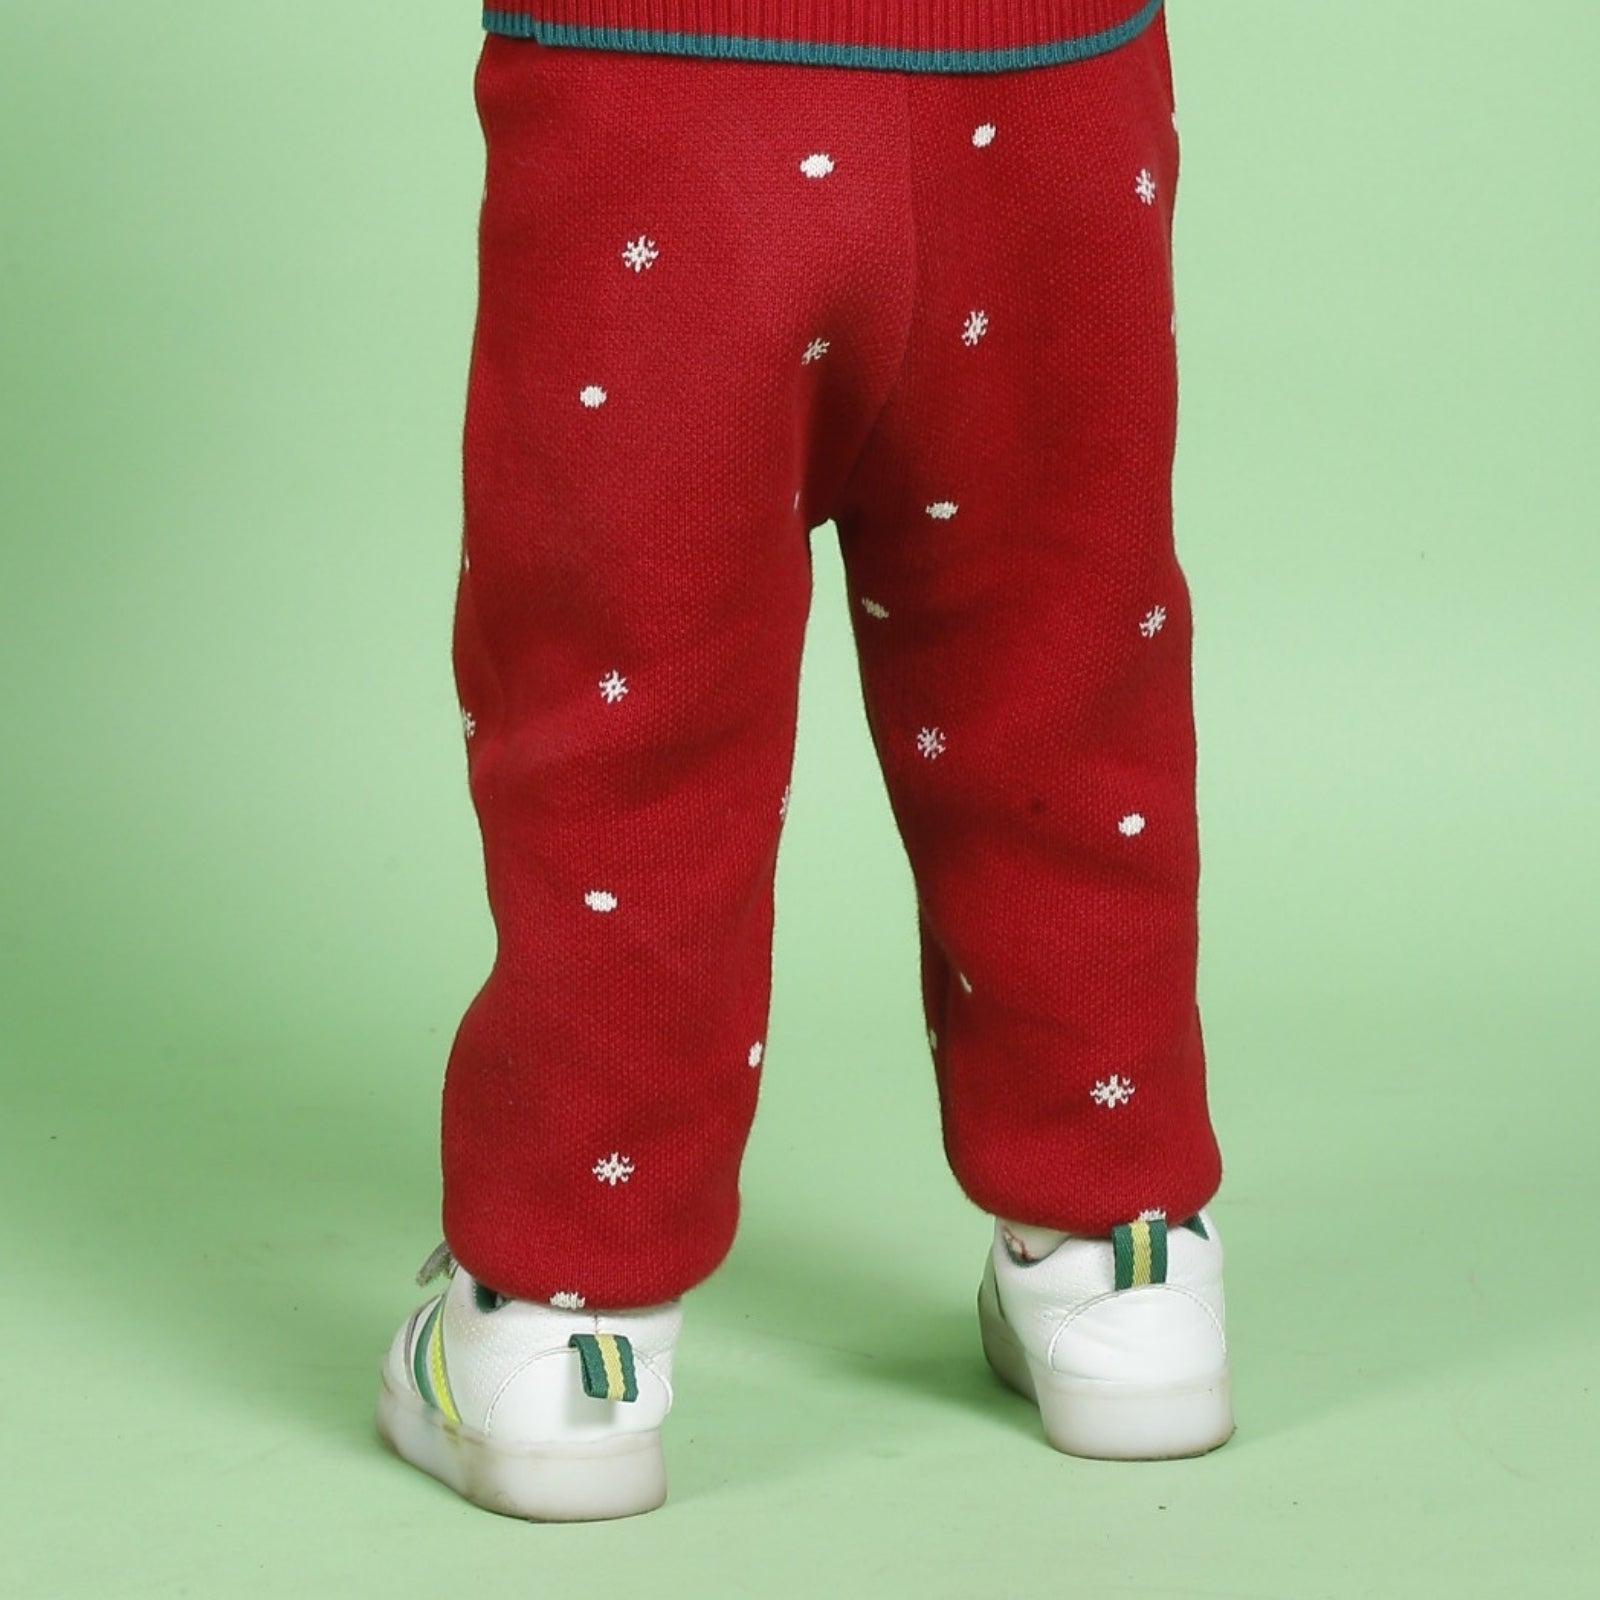 Greendeer Hearth Warming Bear Jacquard 100% Cotton Sweater - Powder Blue & Cherry Red Set of 2